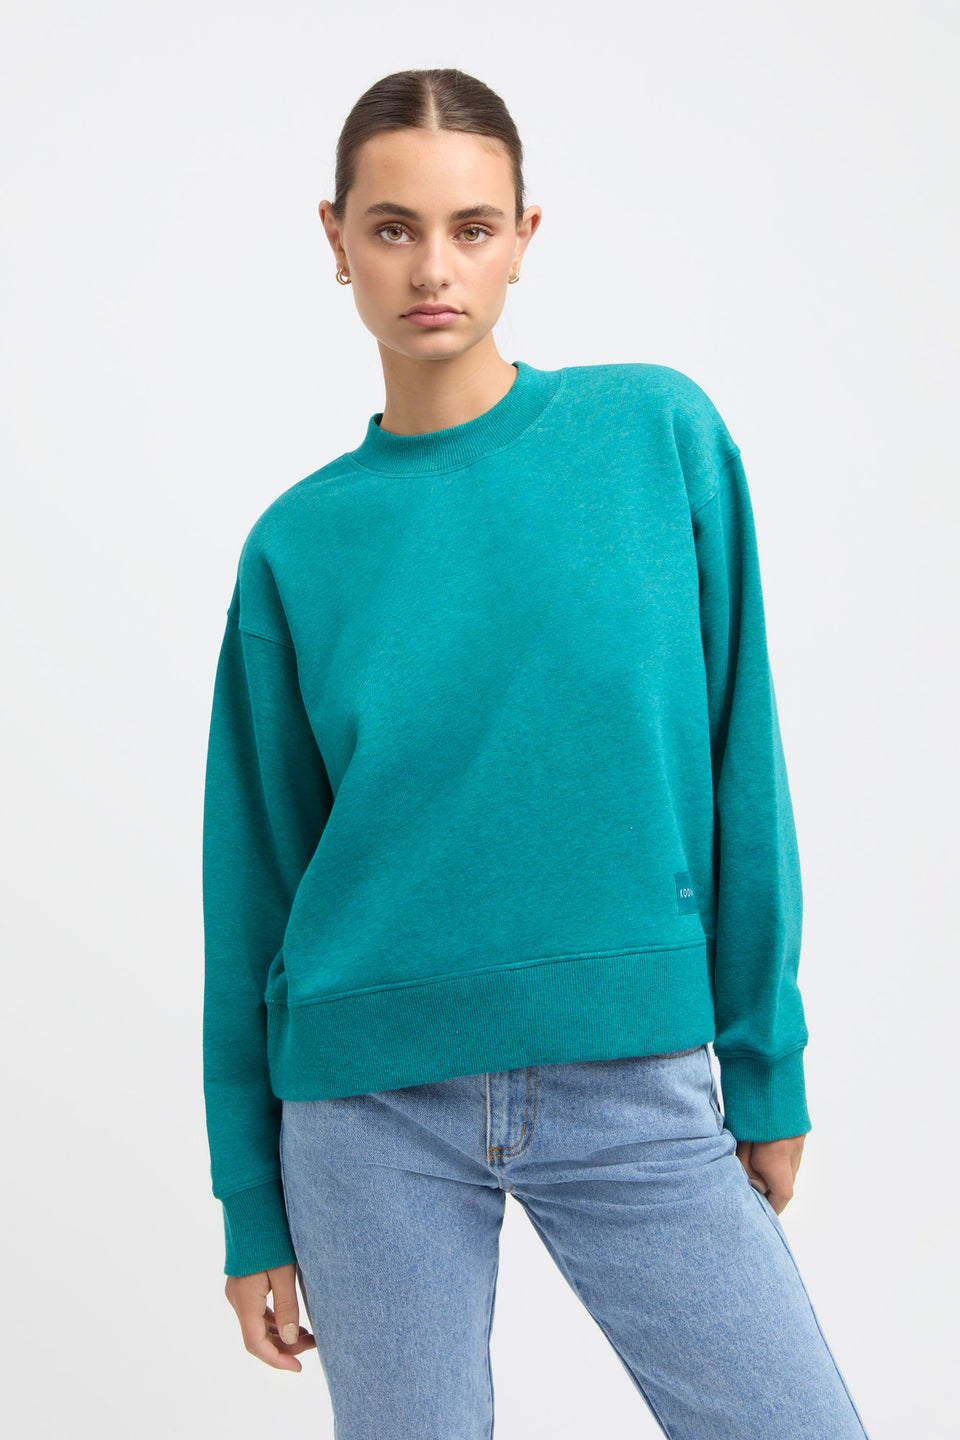 Buy Brushed Lana Sweater Teal Green Marle Online | Australia